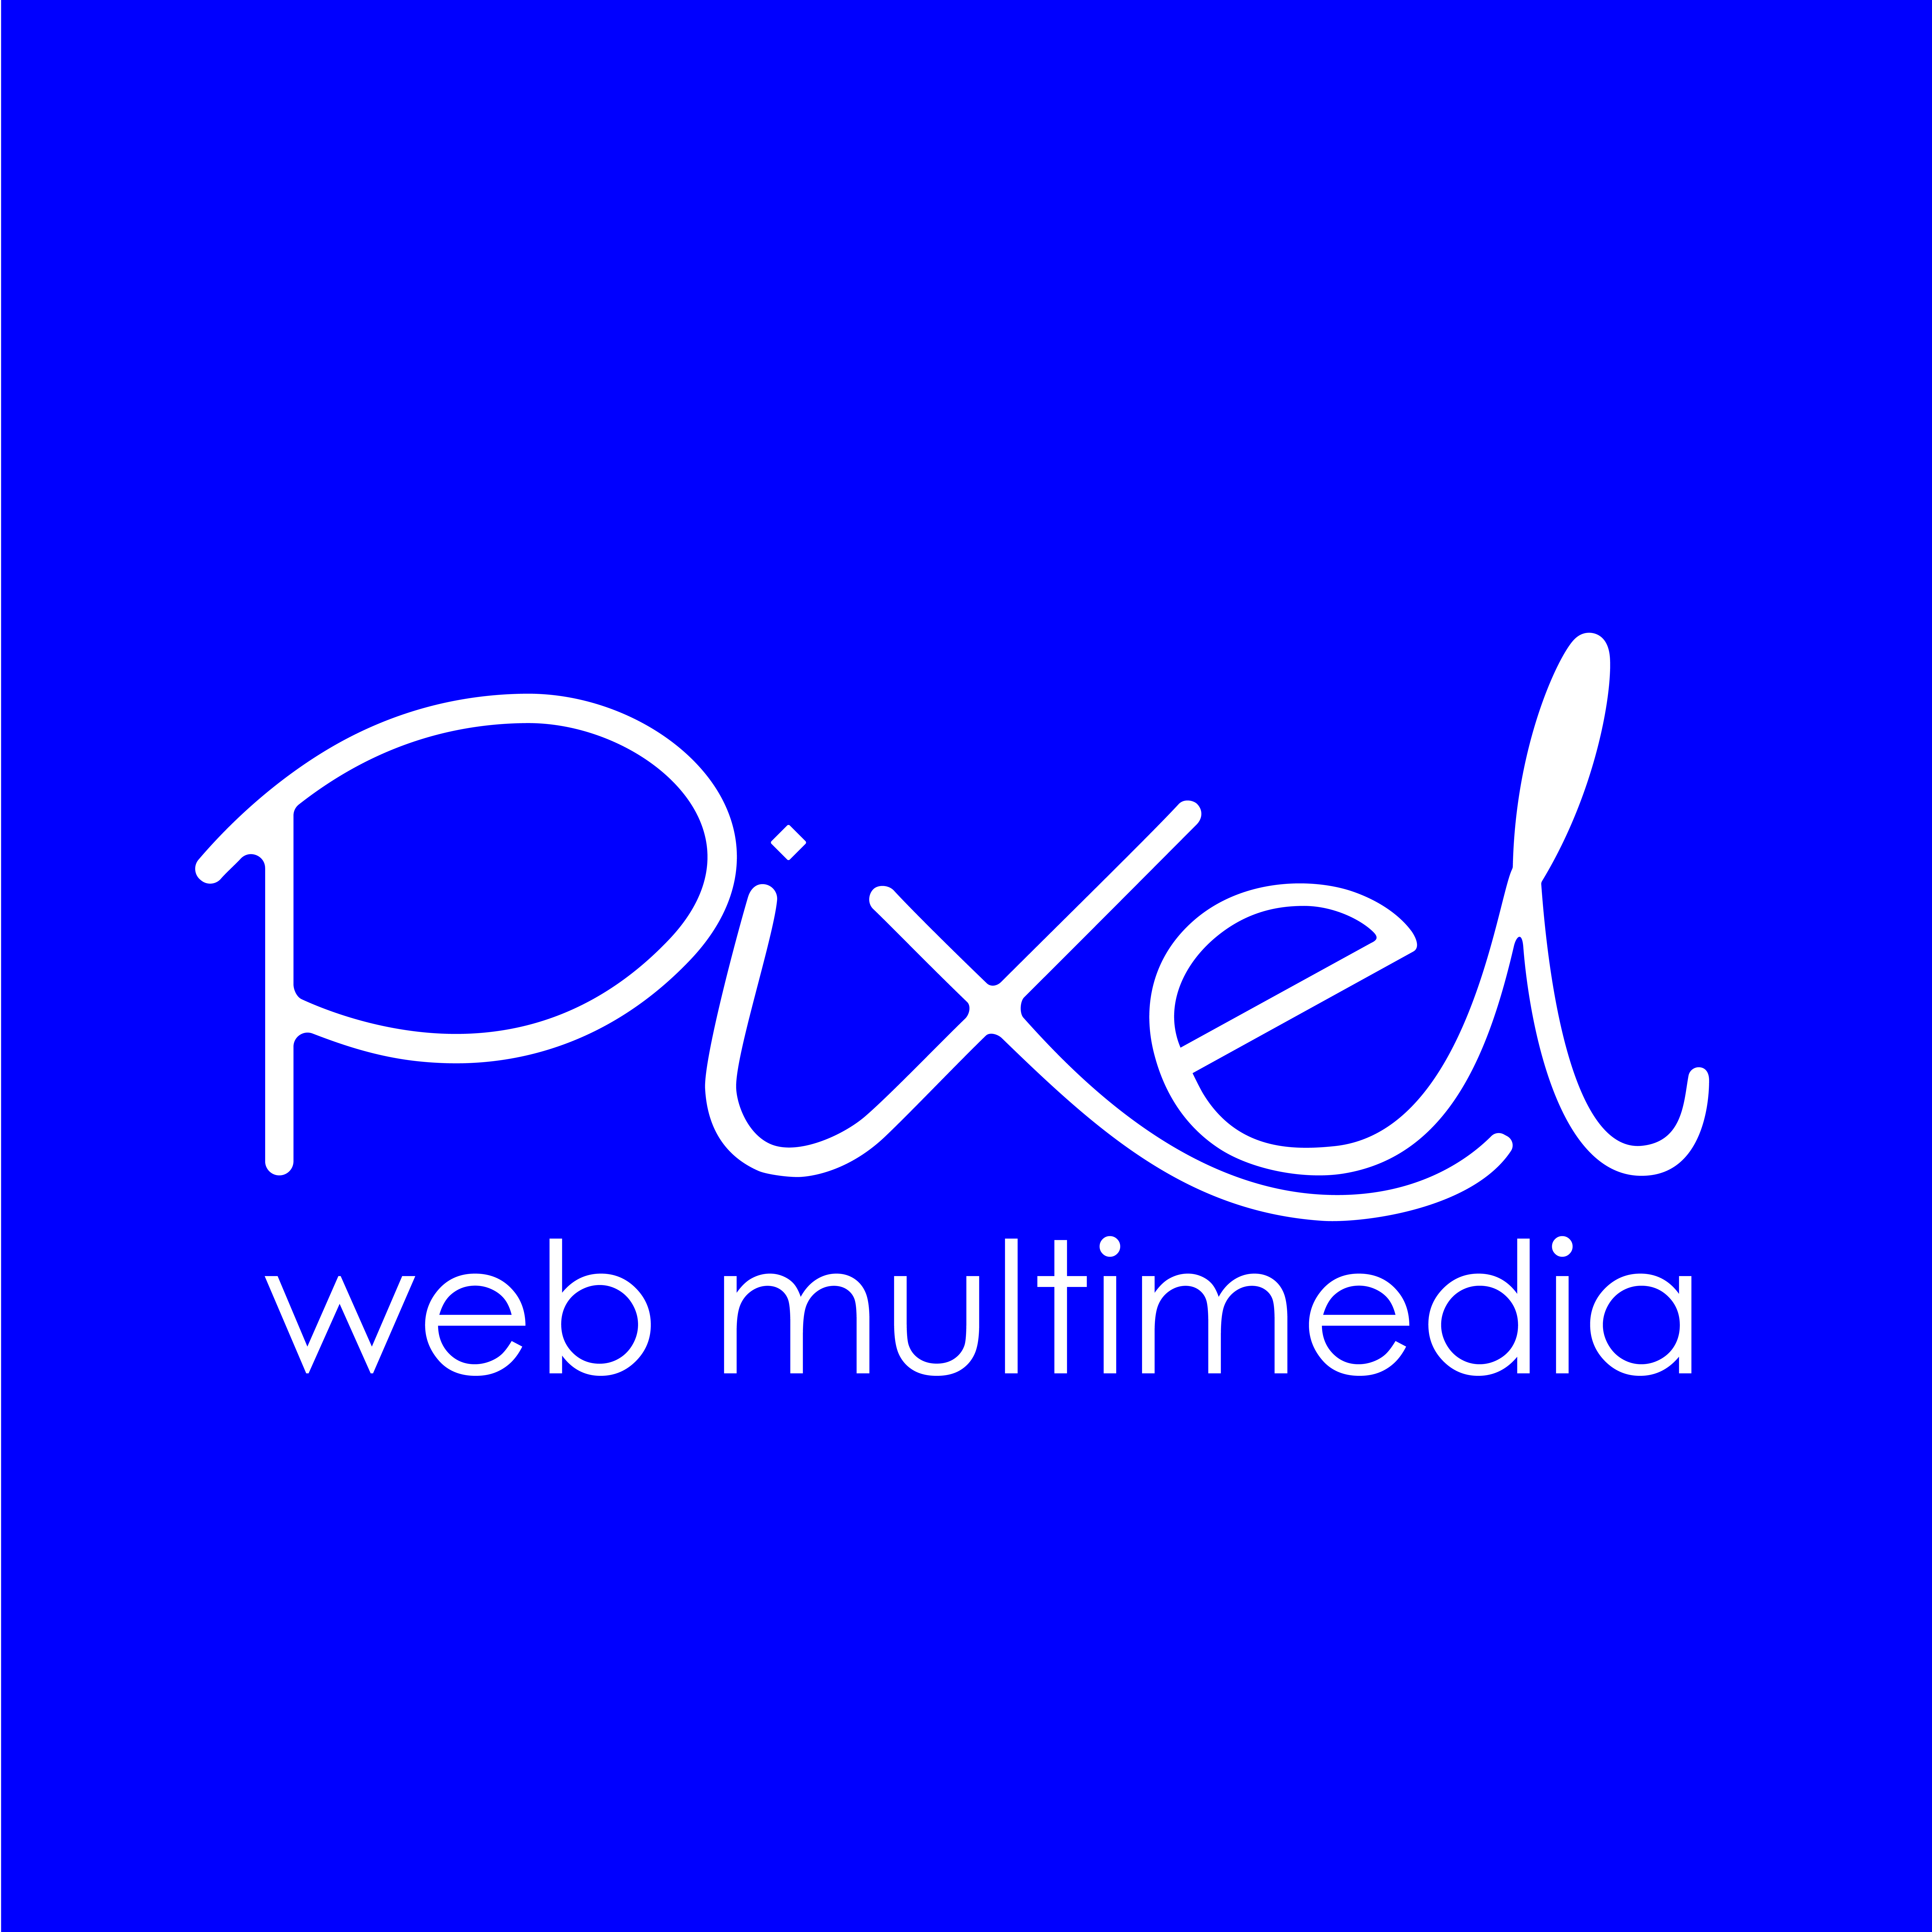 Pixel Web Multimedia Logo